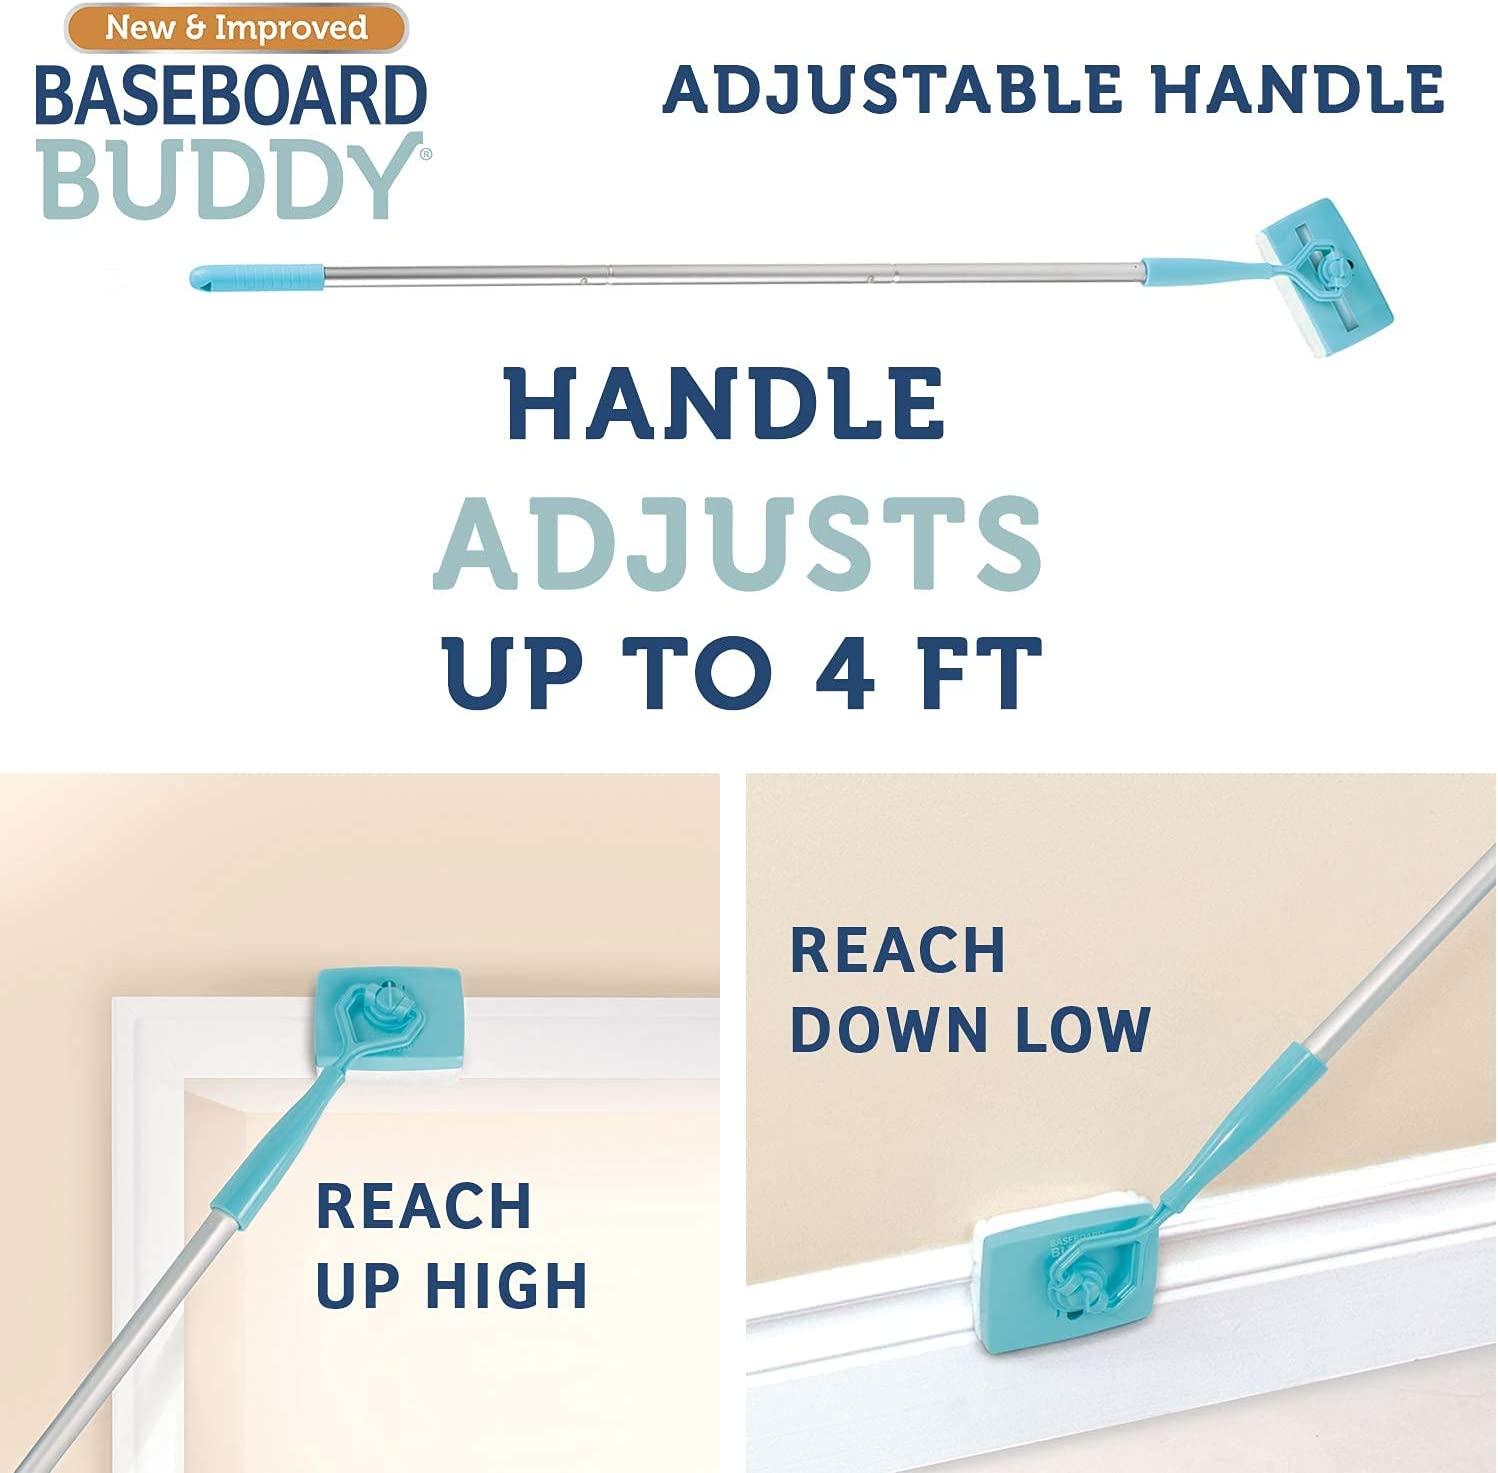 Baseboard Buddy Baseboard & Molding Cleaning Tool! Includes 1